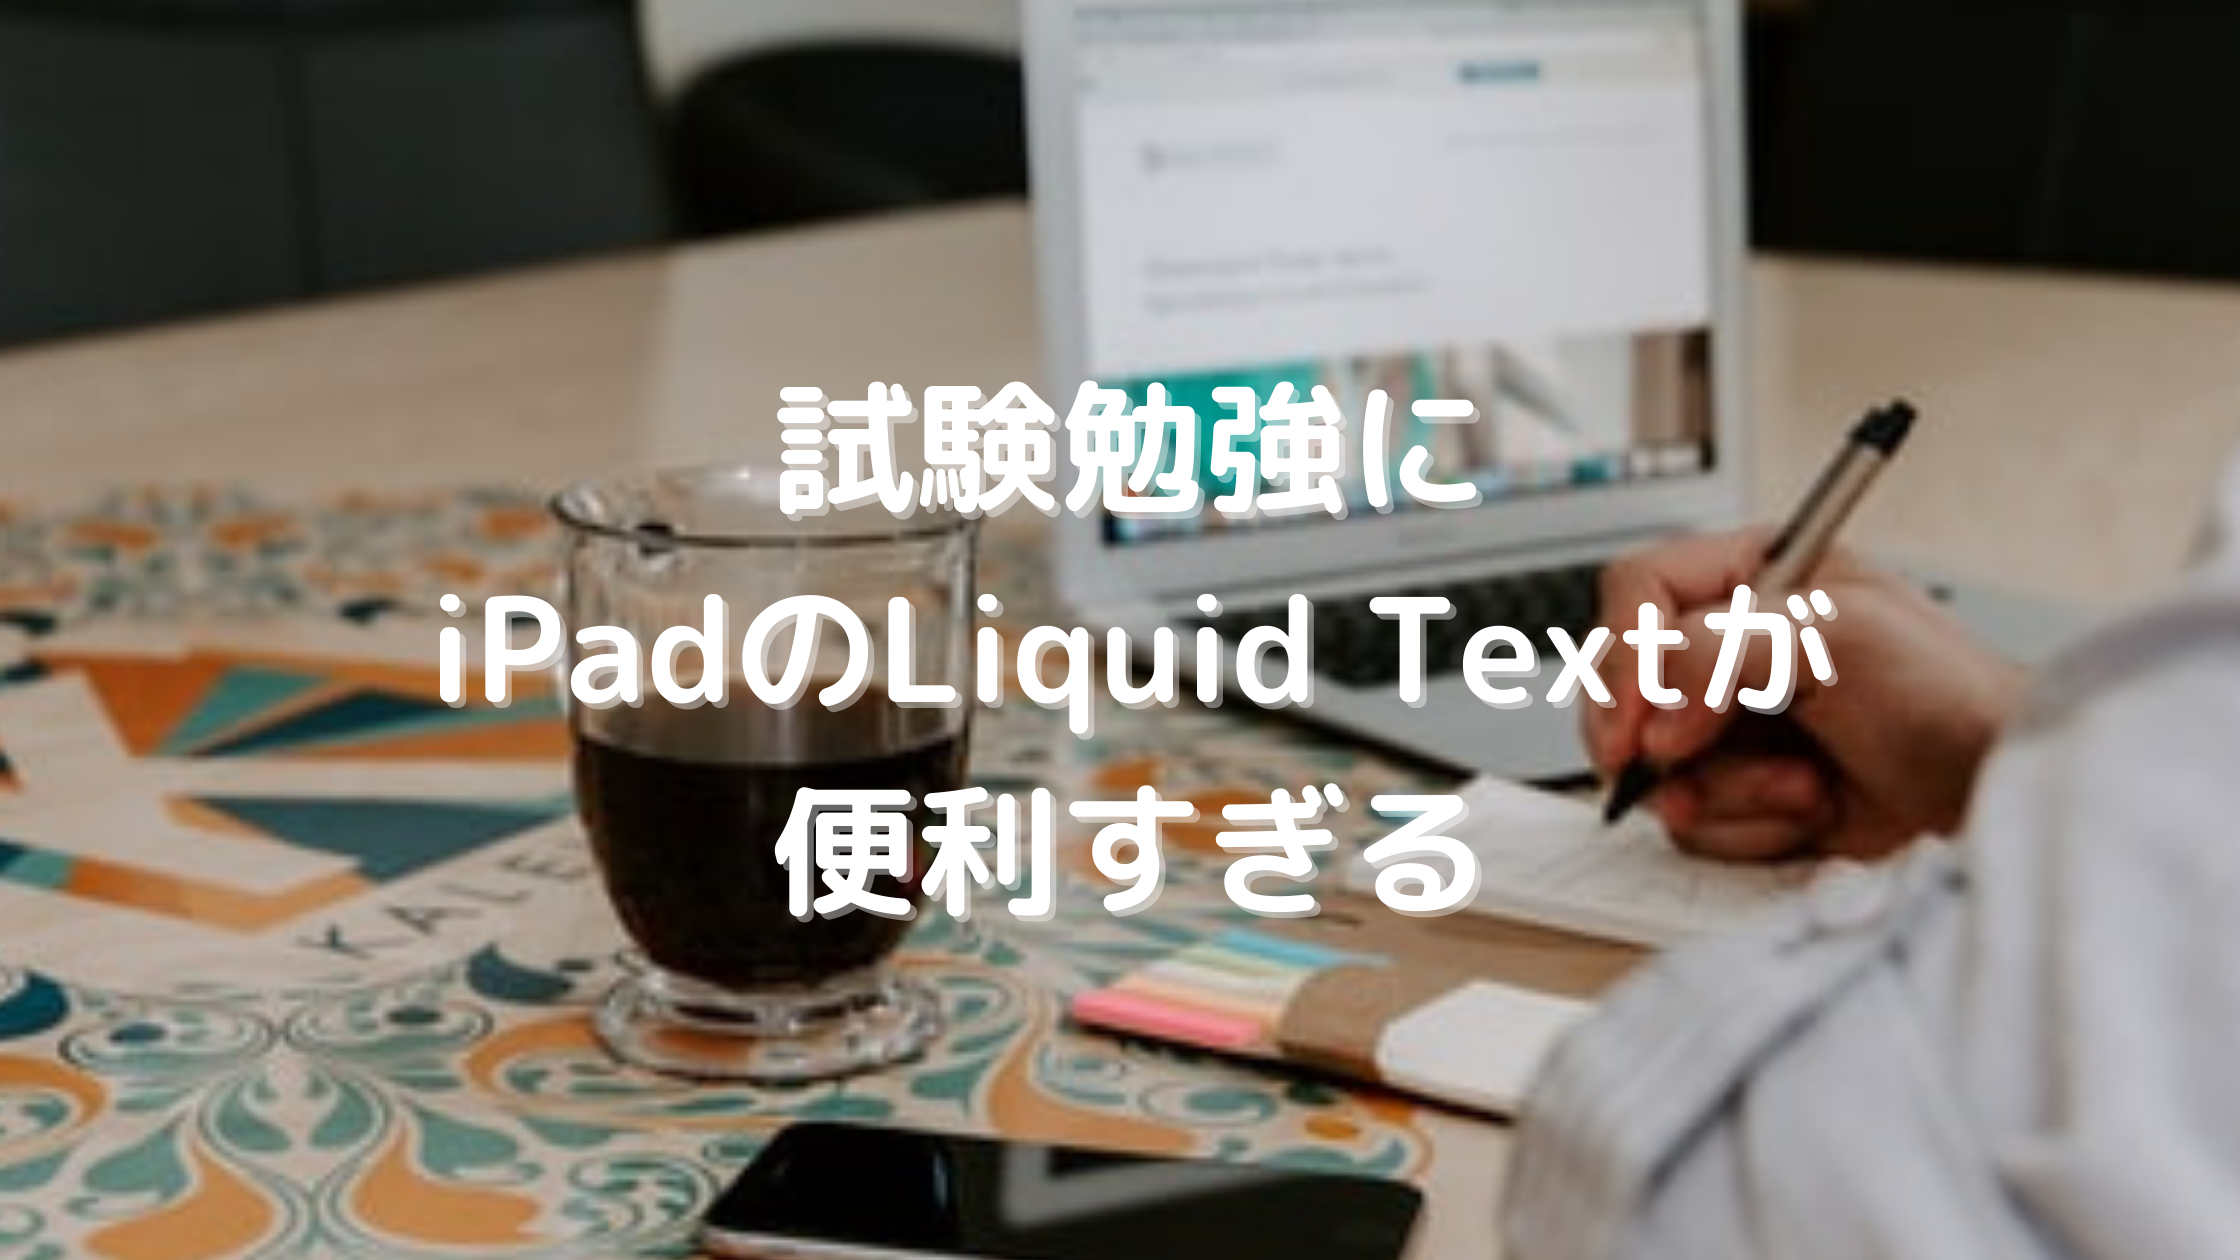 Liquid Textが驚くほど便利 Ipadでwsetの勉強を効率化 Pinnolog